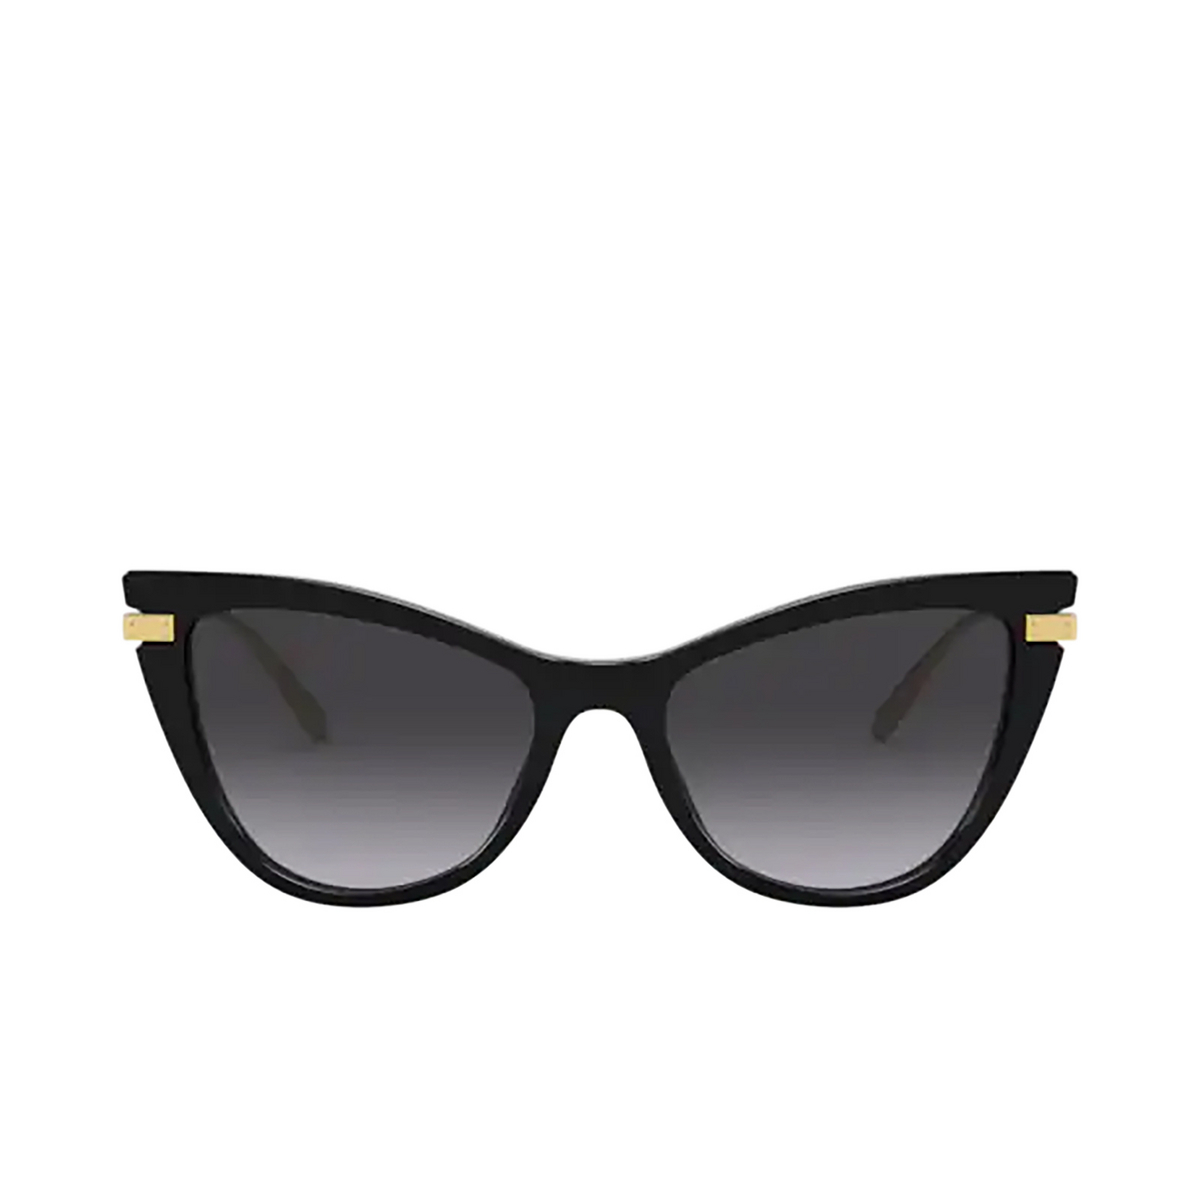 Dolce & Gabbana DG4381 Sunglasses 501/8G Black - front view